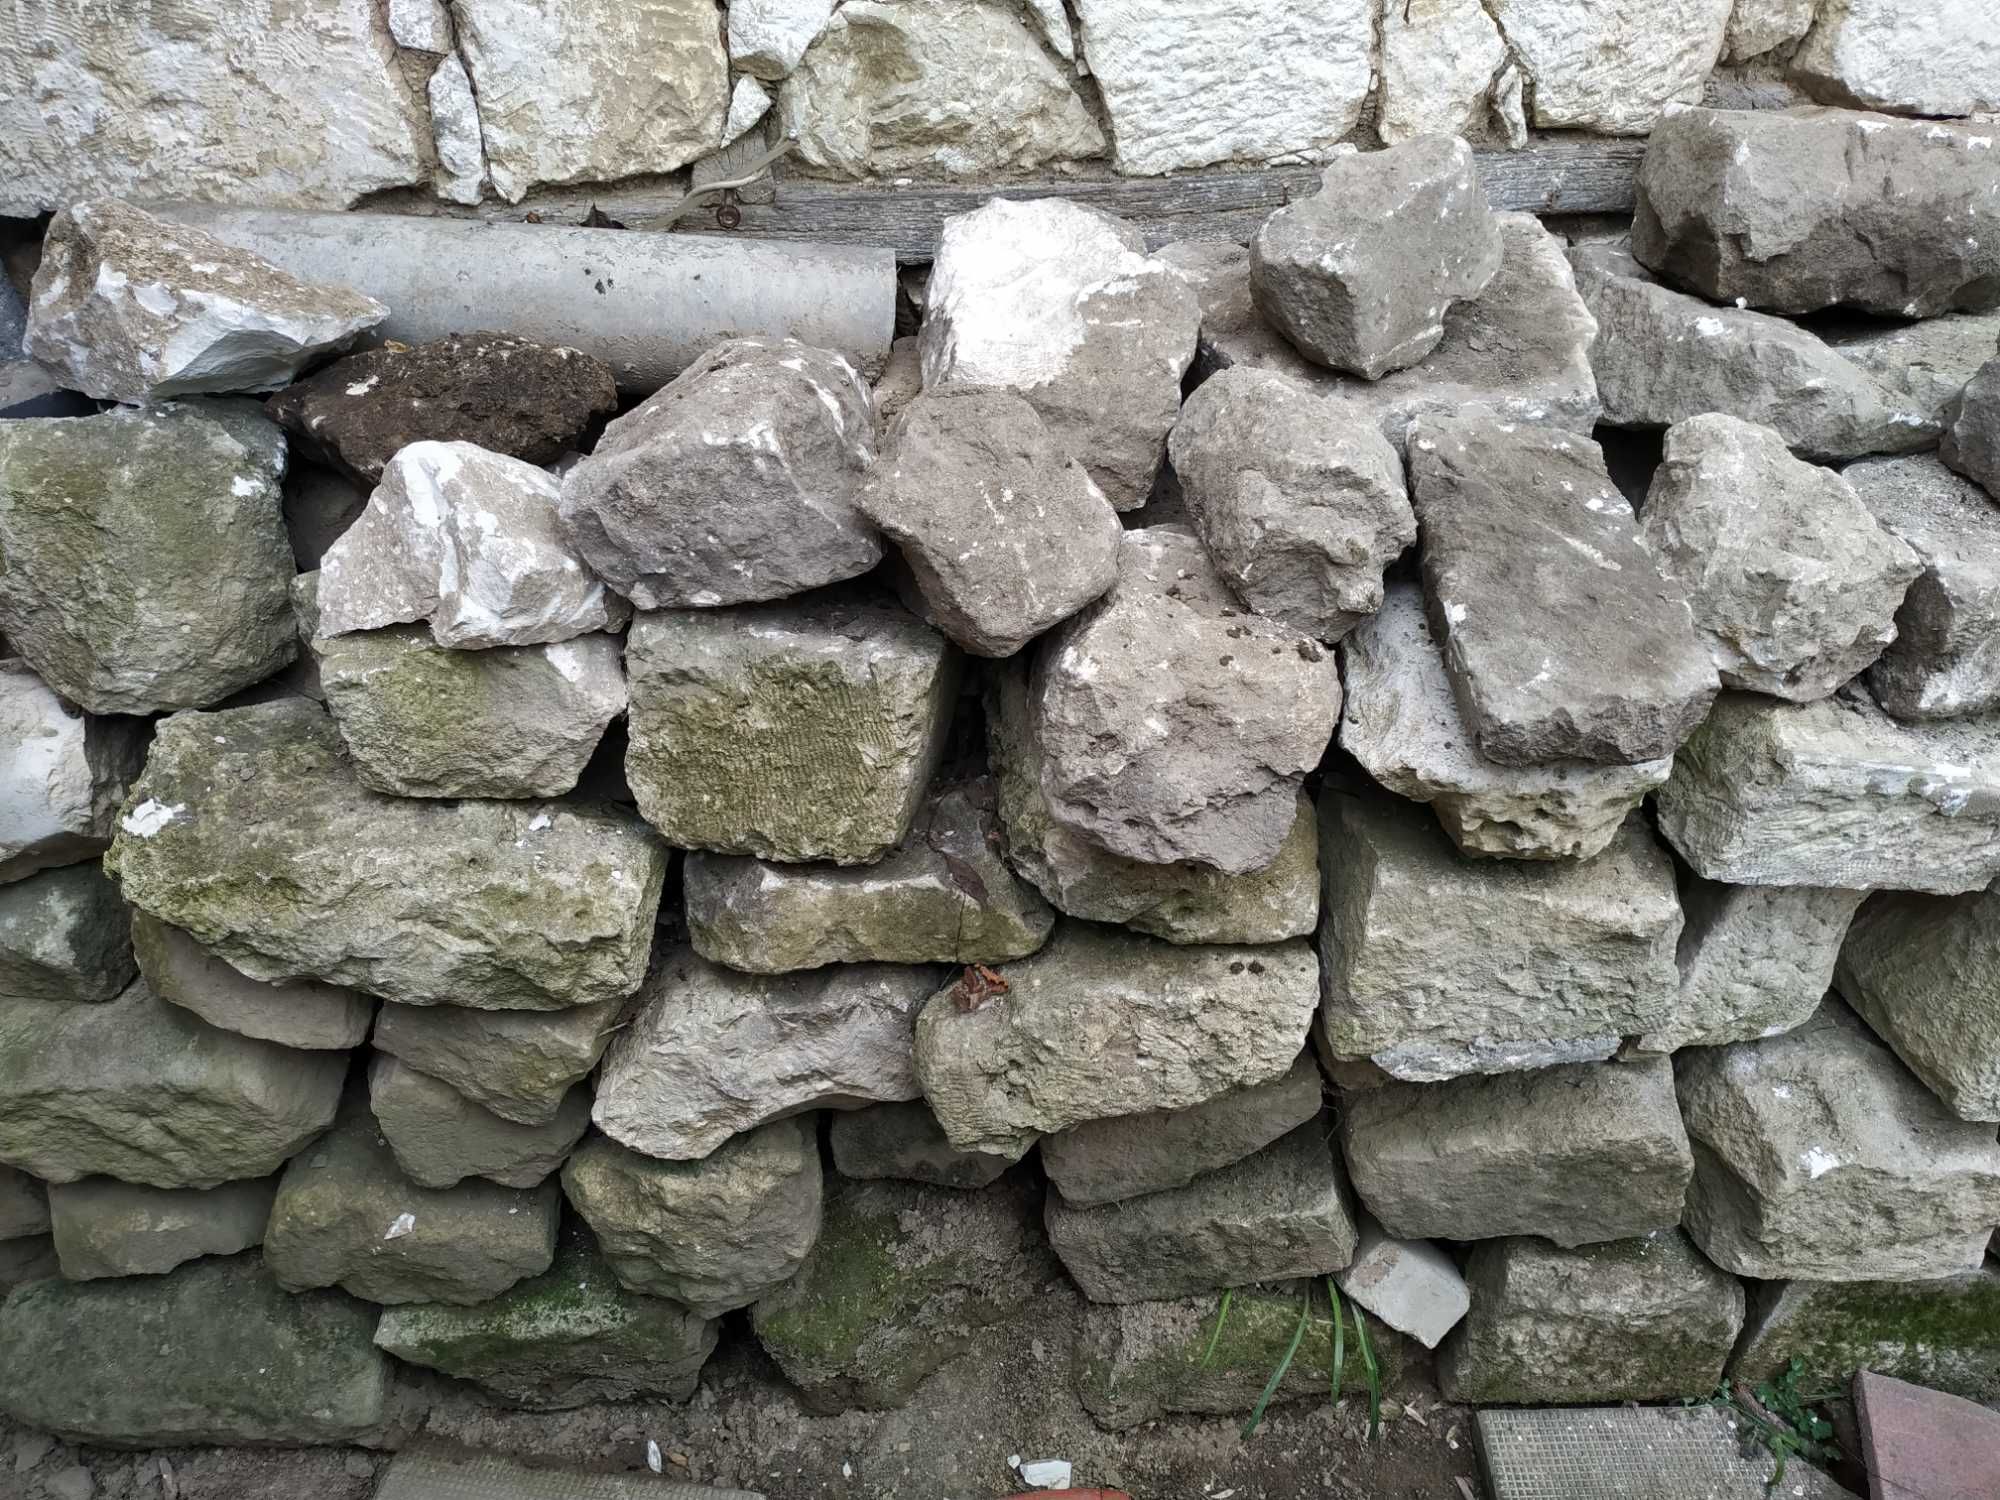 Дялани камъни за ограда или за основи